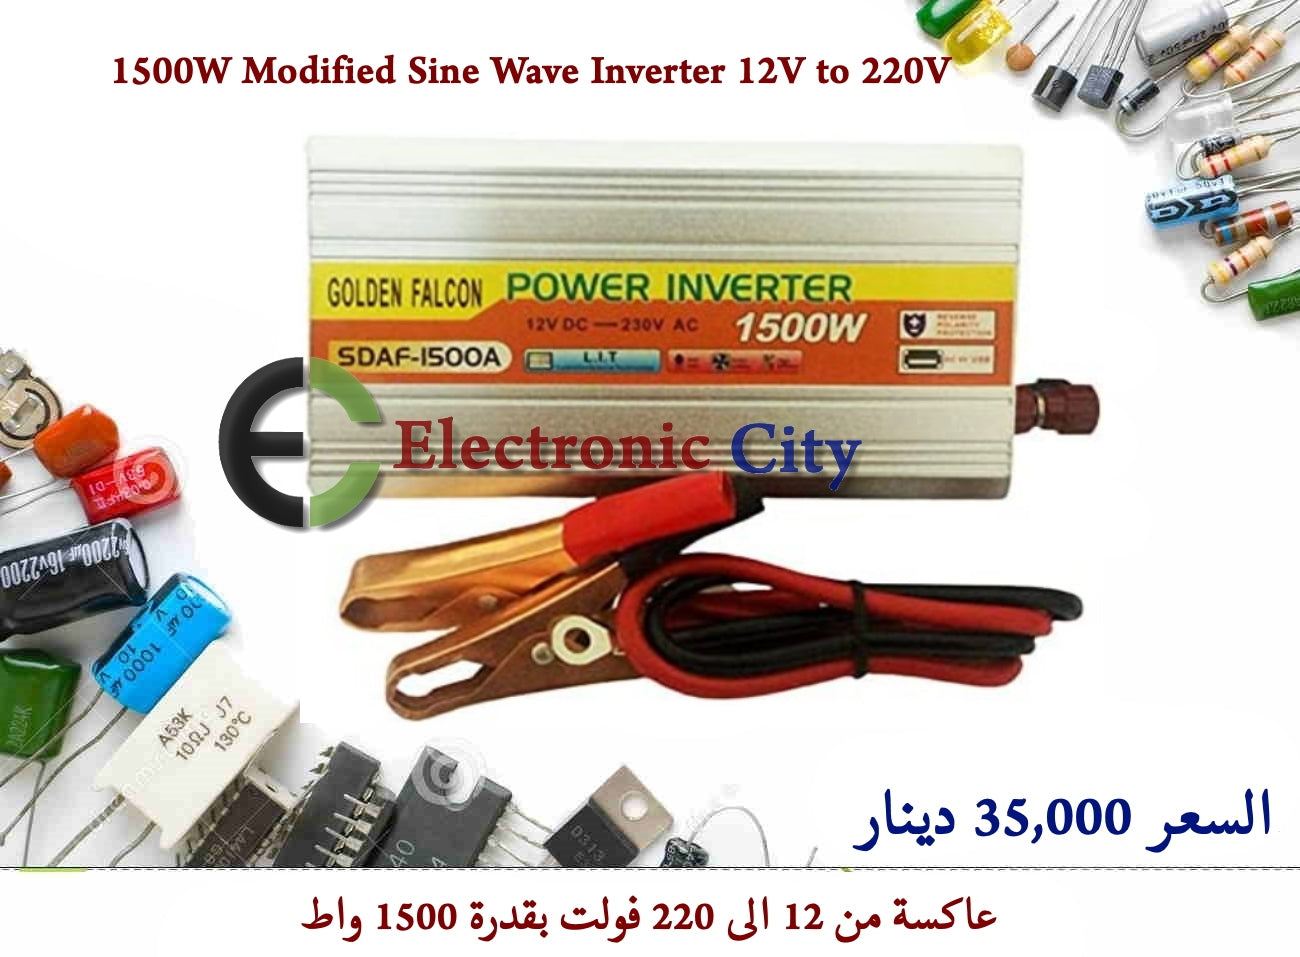 1500W Modified Sine Wave Inverter 12V to 220V